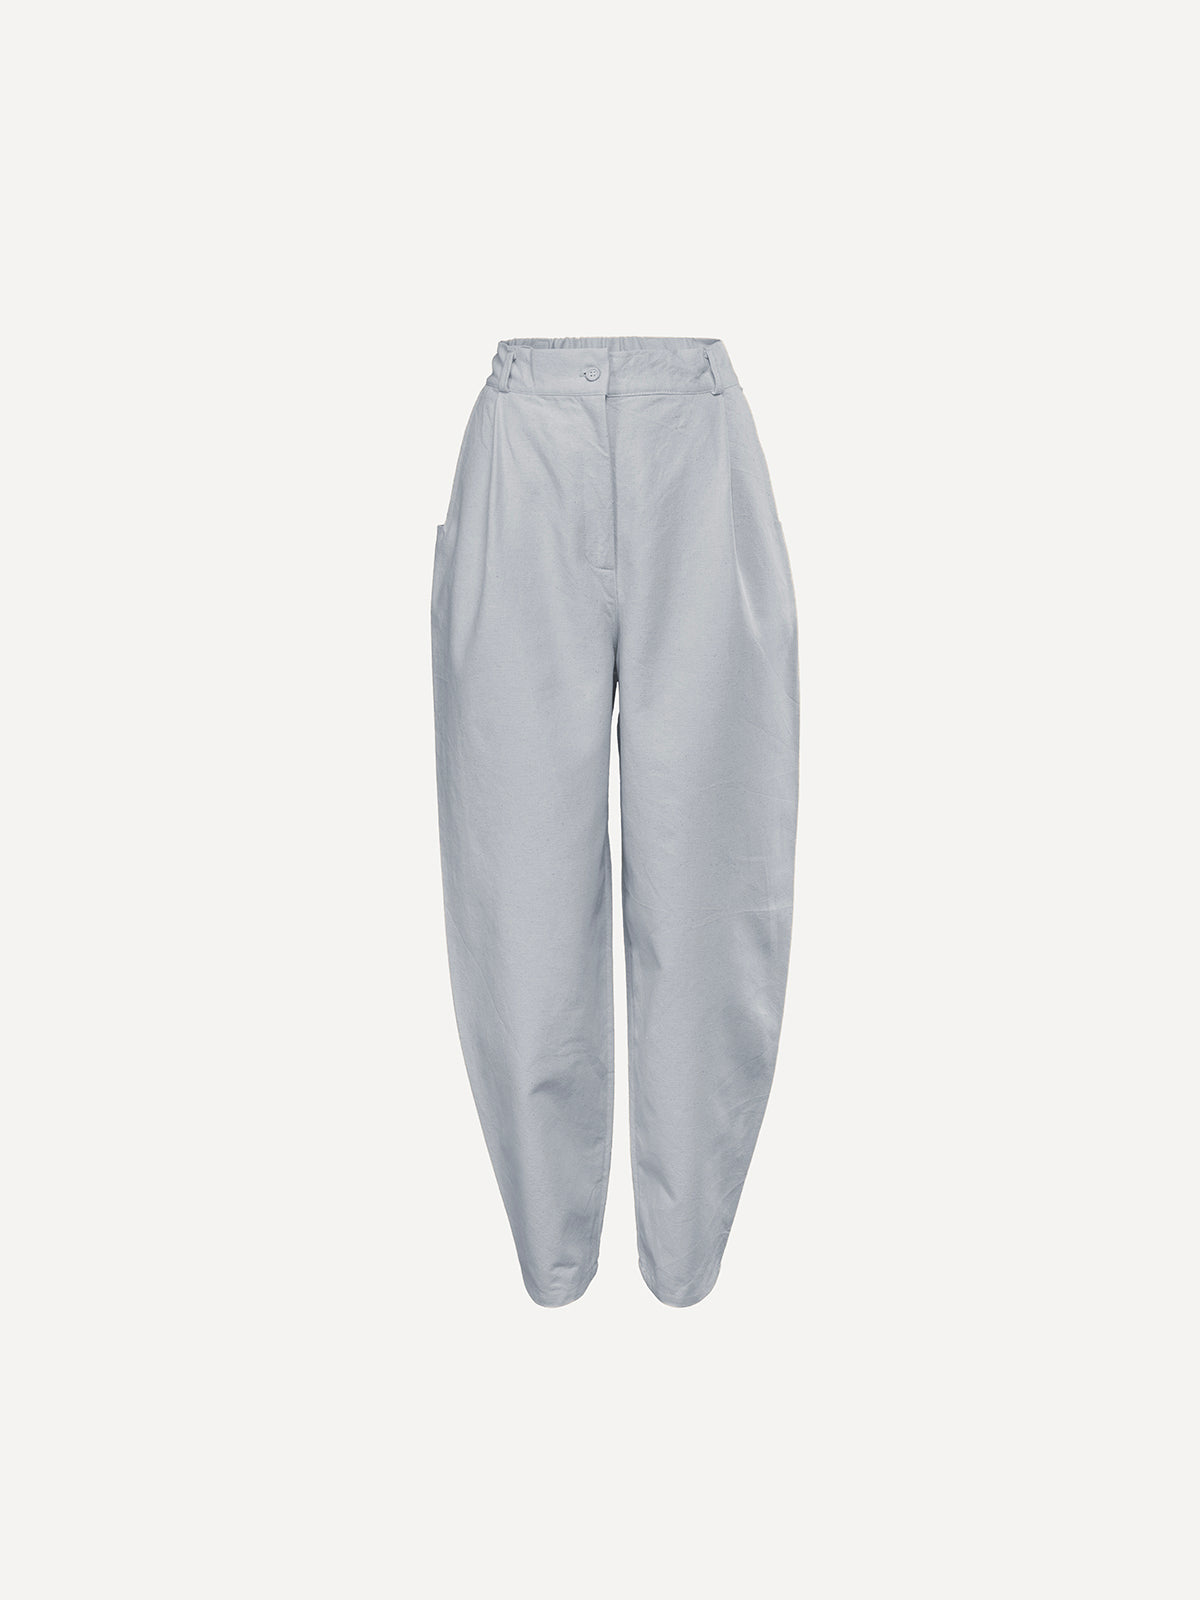 Gray slouchy women's pants